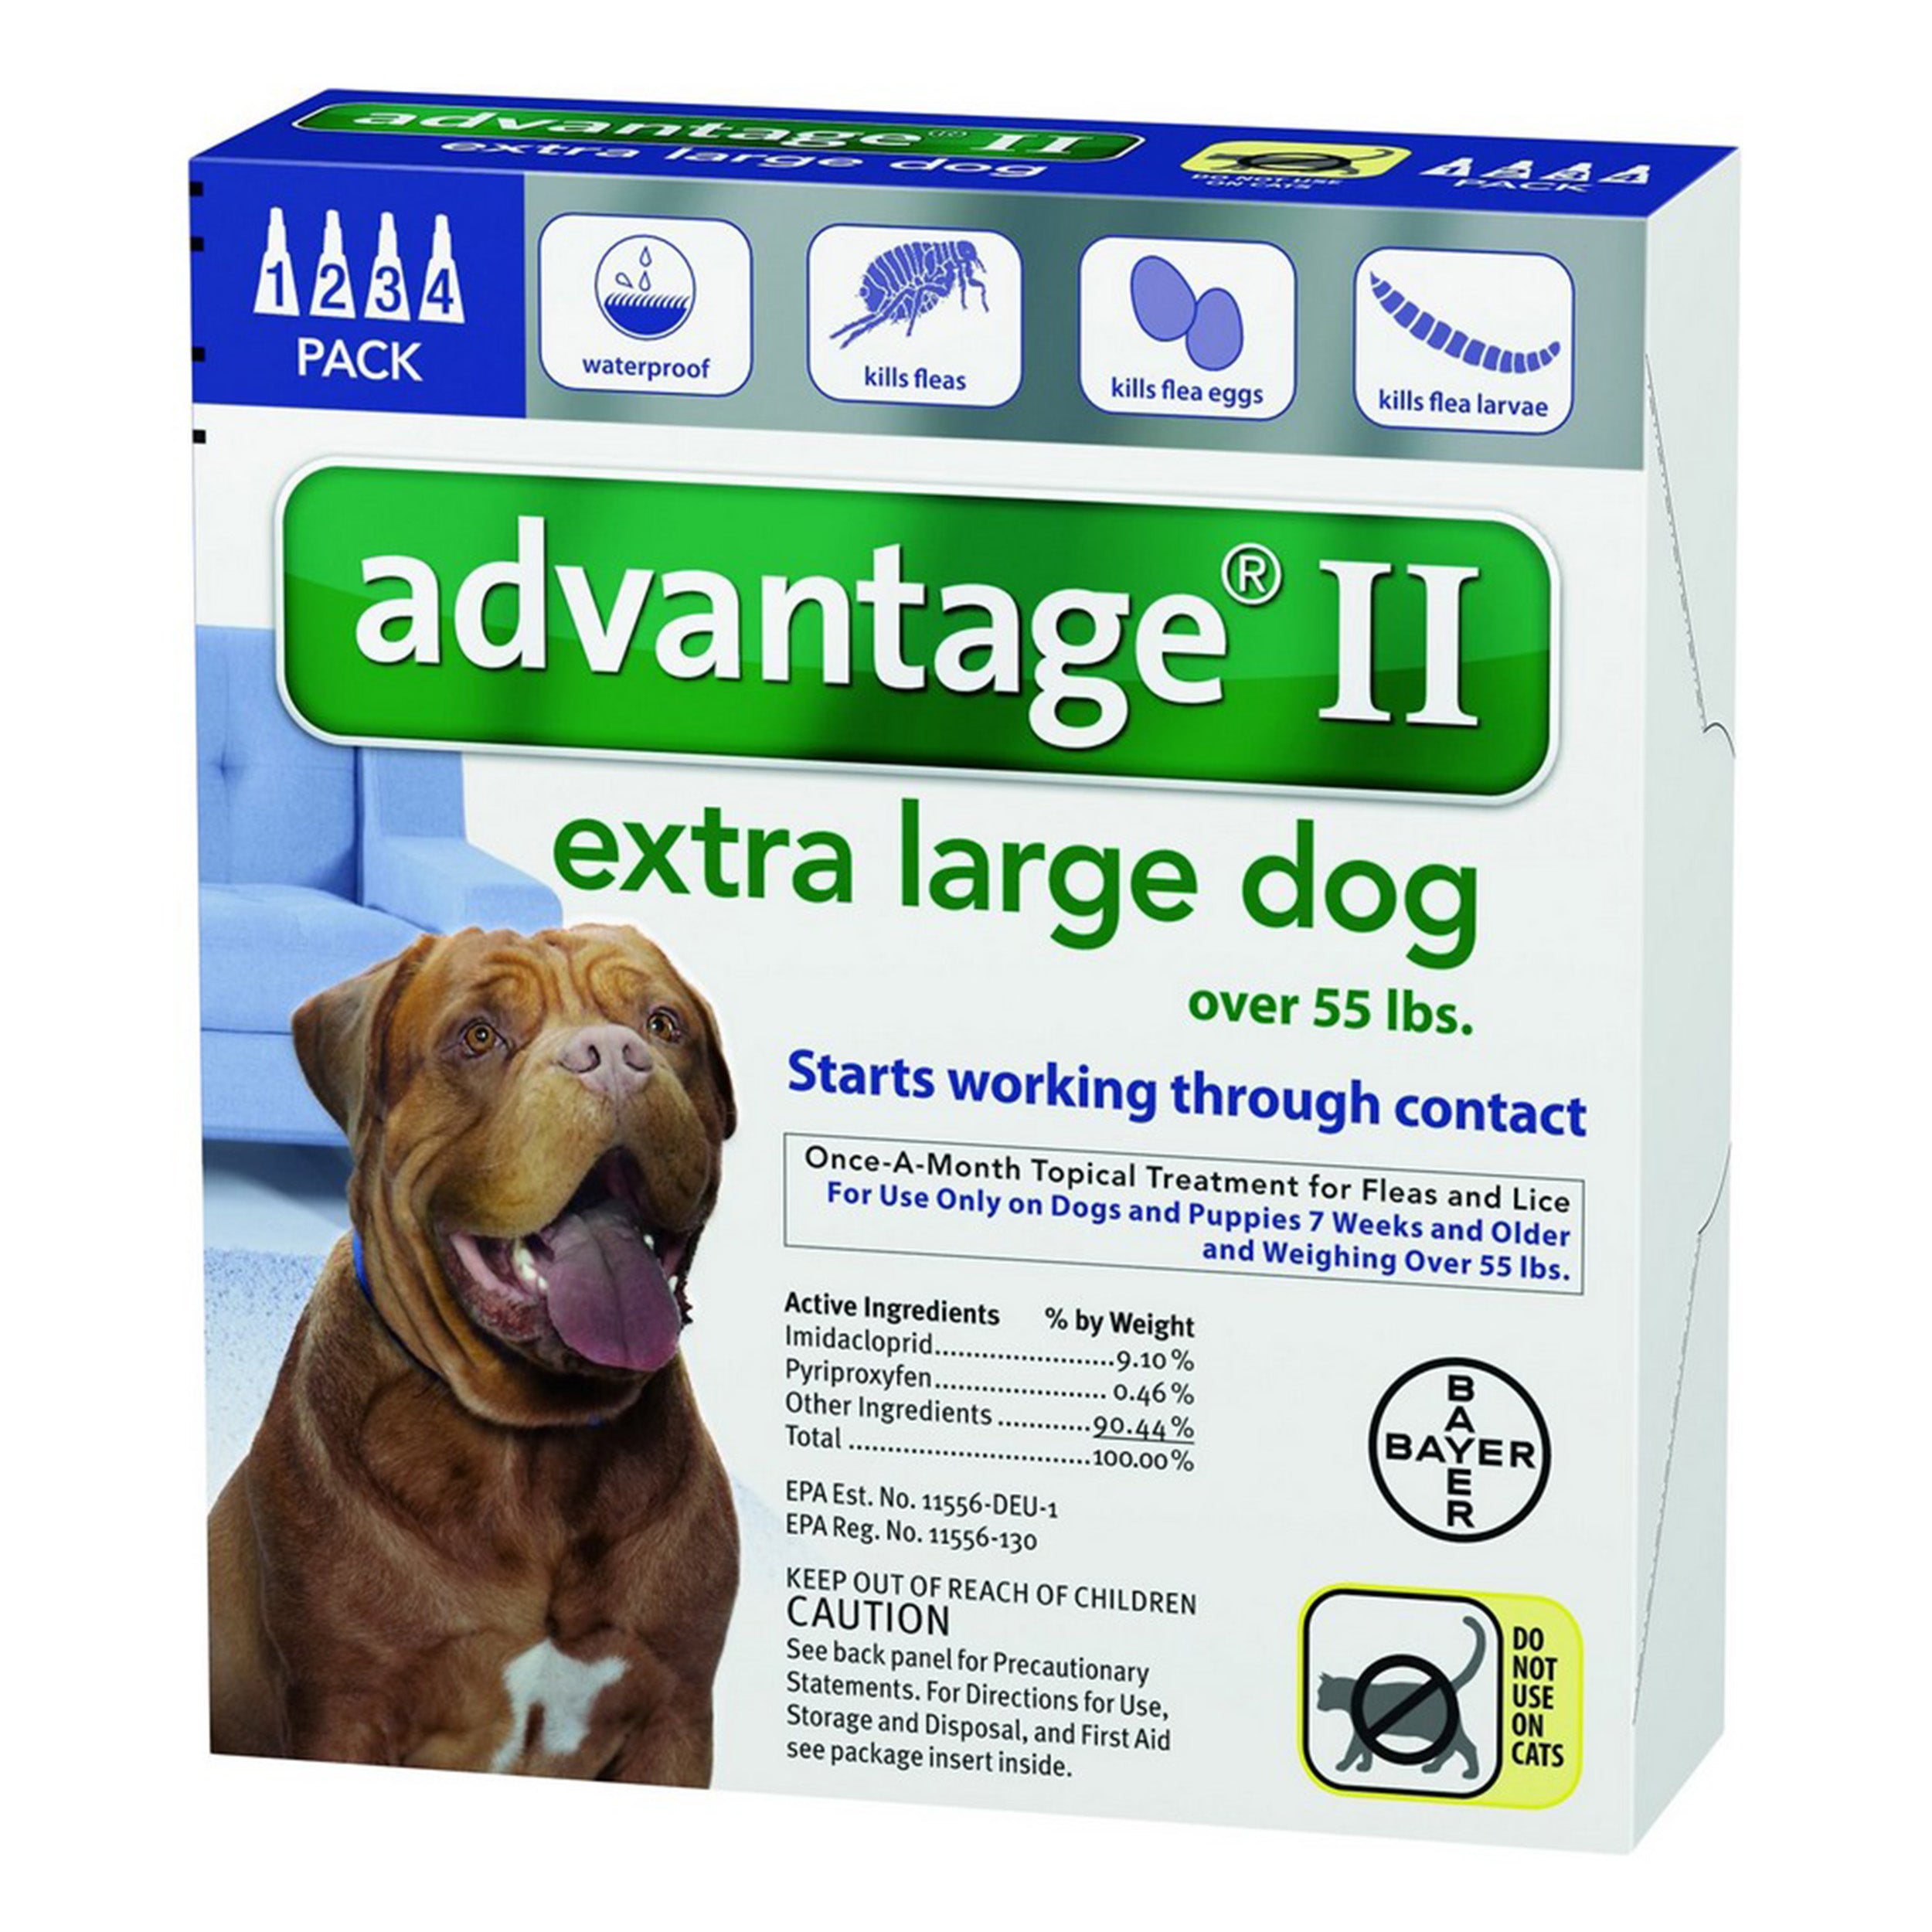 Advantage II Flea Spot Treatment for Dogs, over 55 lbs